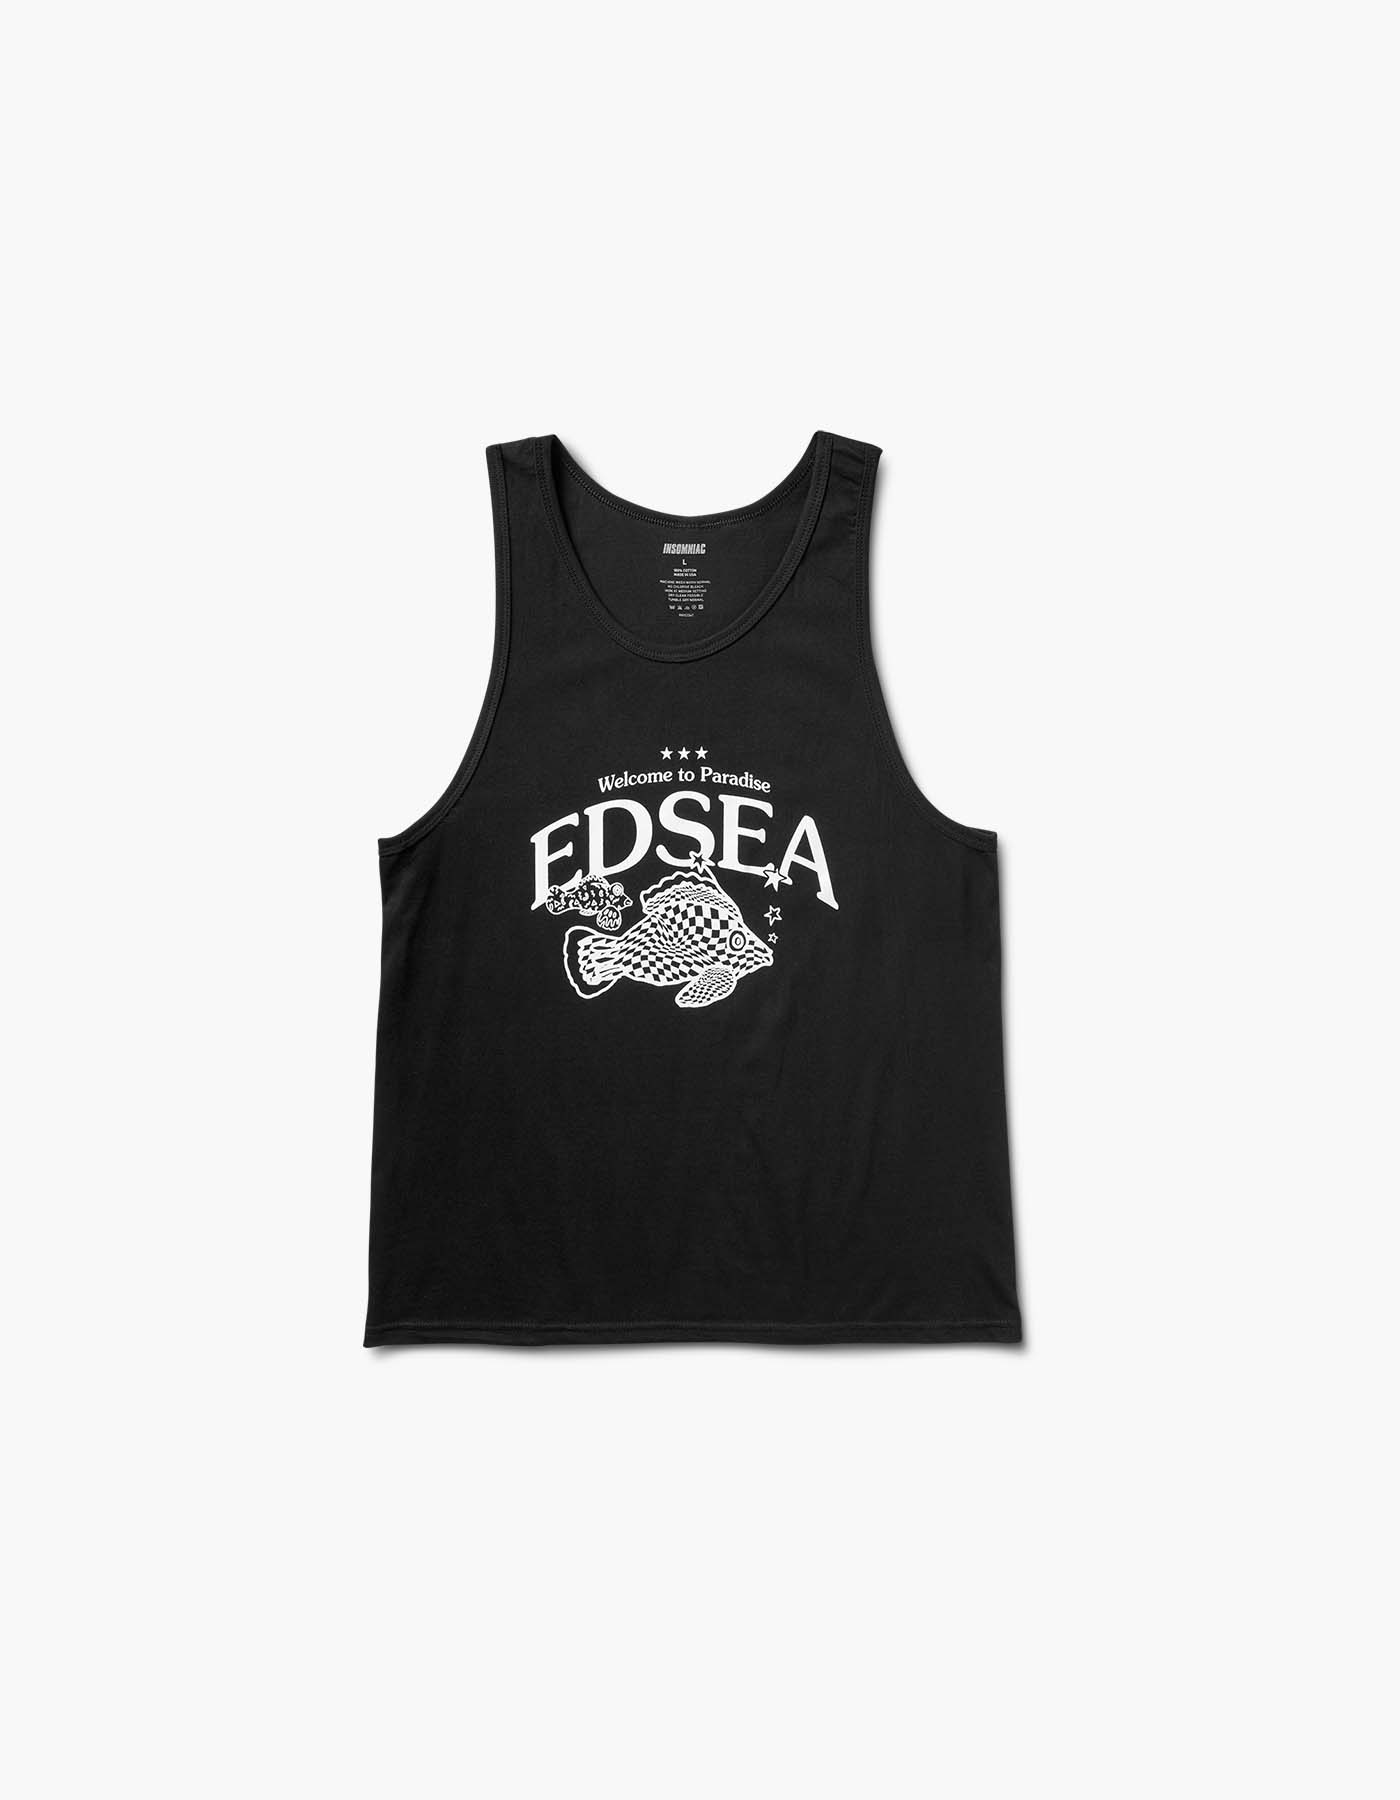 EDSea Paradise Tank